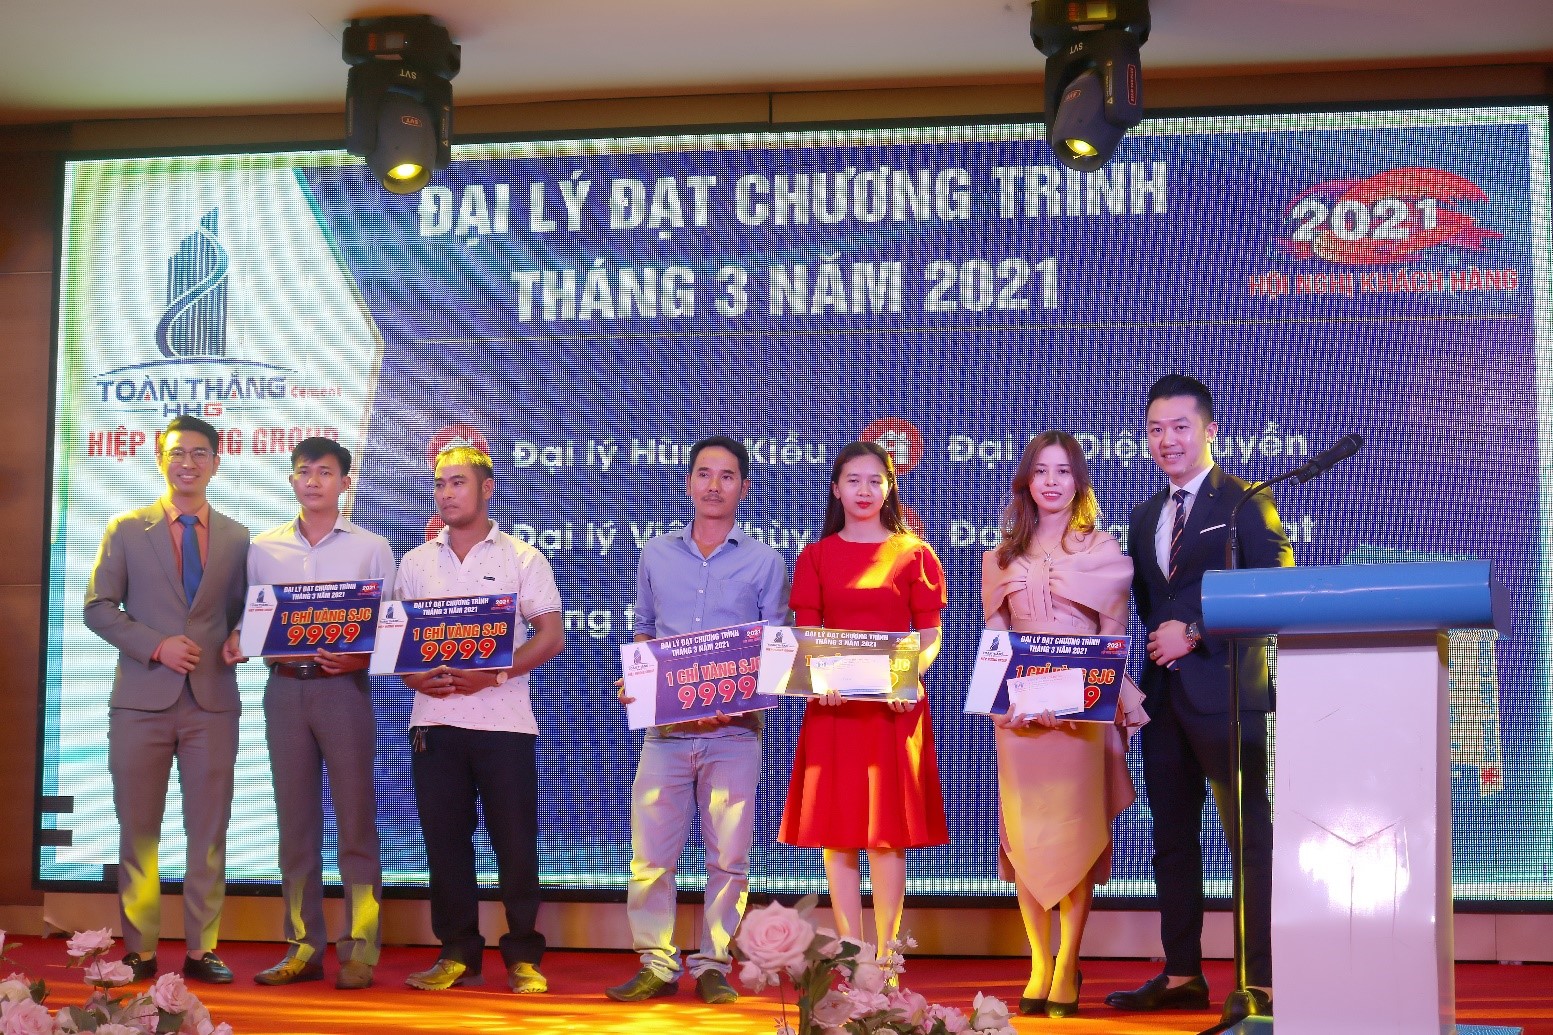 Toan Thang 03